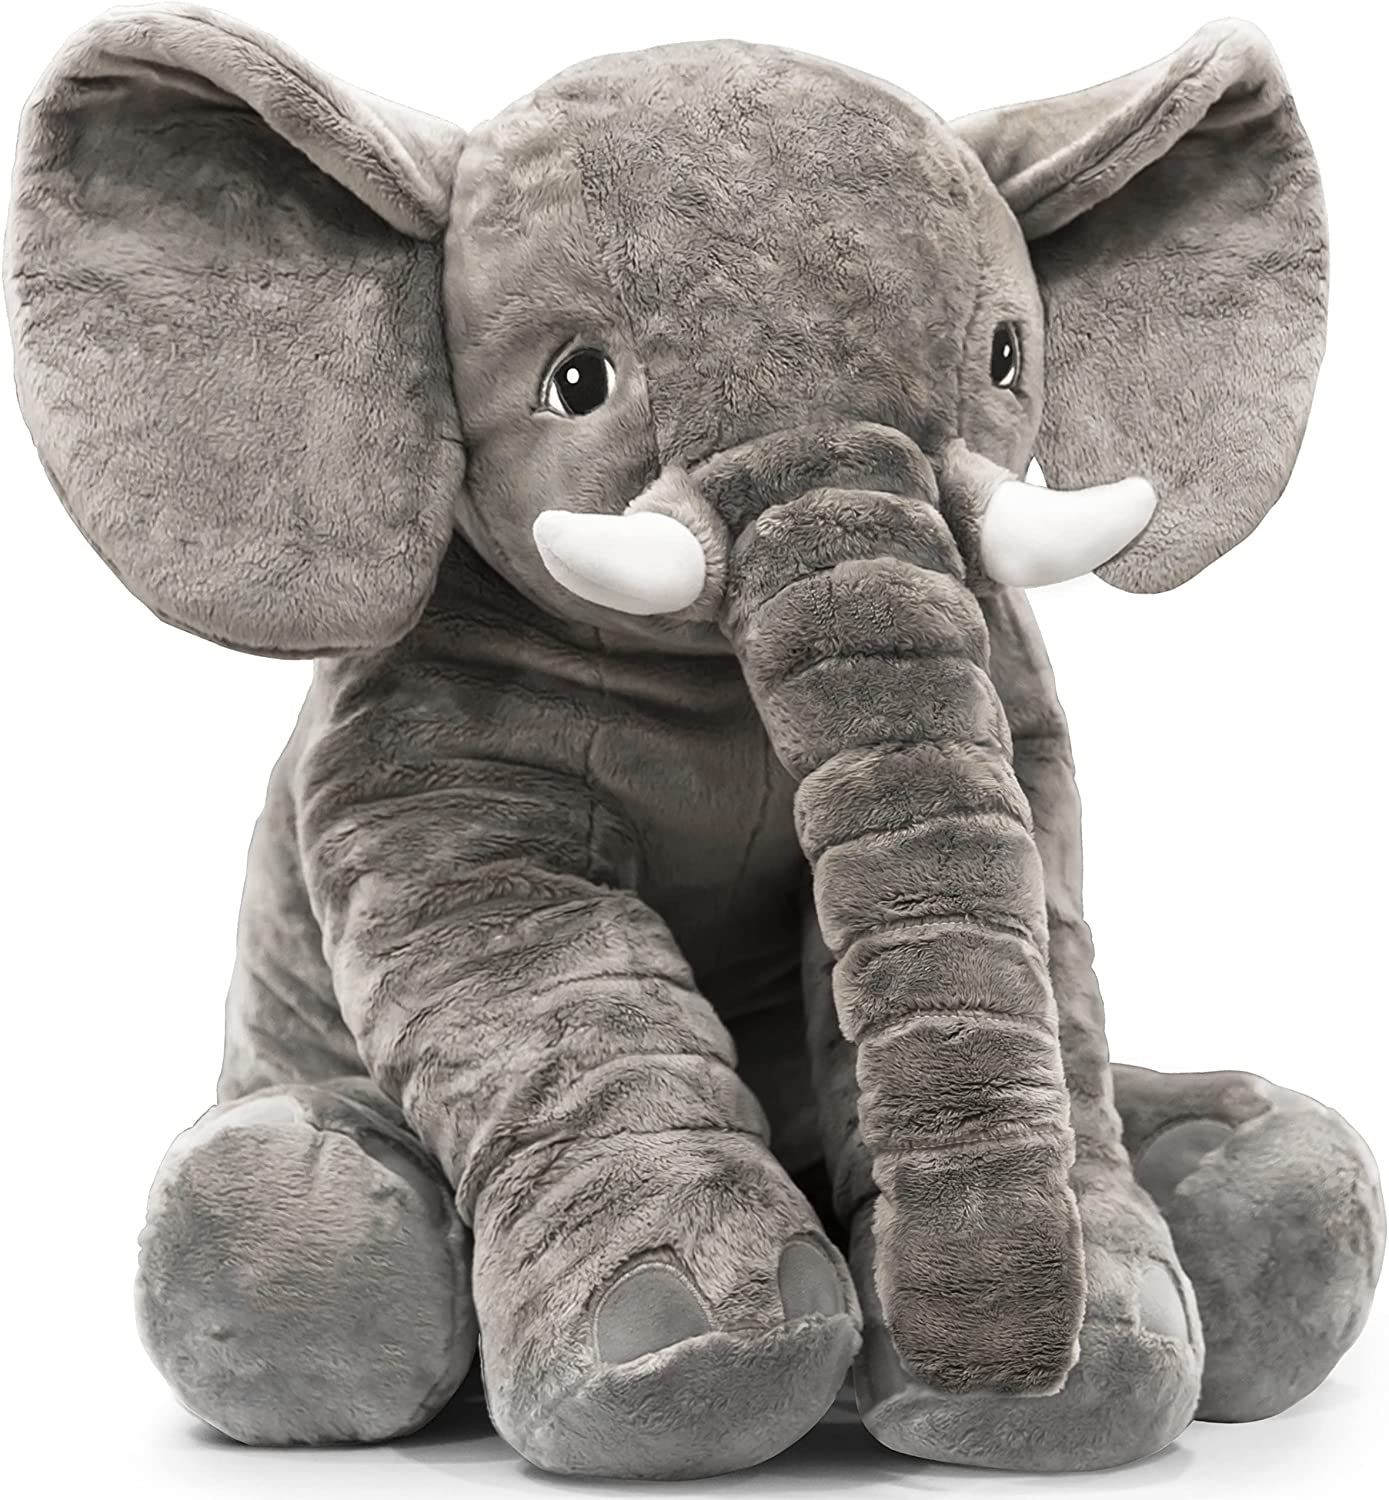 Elephant Stuffed Plush Pillow Toy : Baby Elephant Pillow - SKINMOZ MARKET